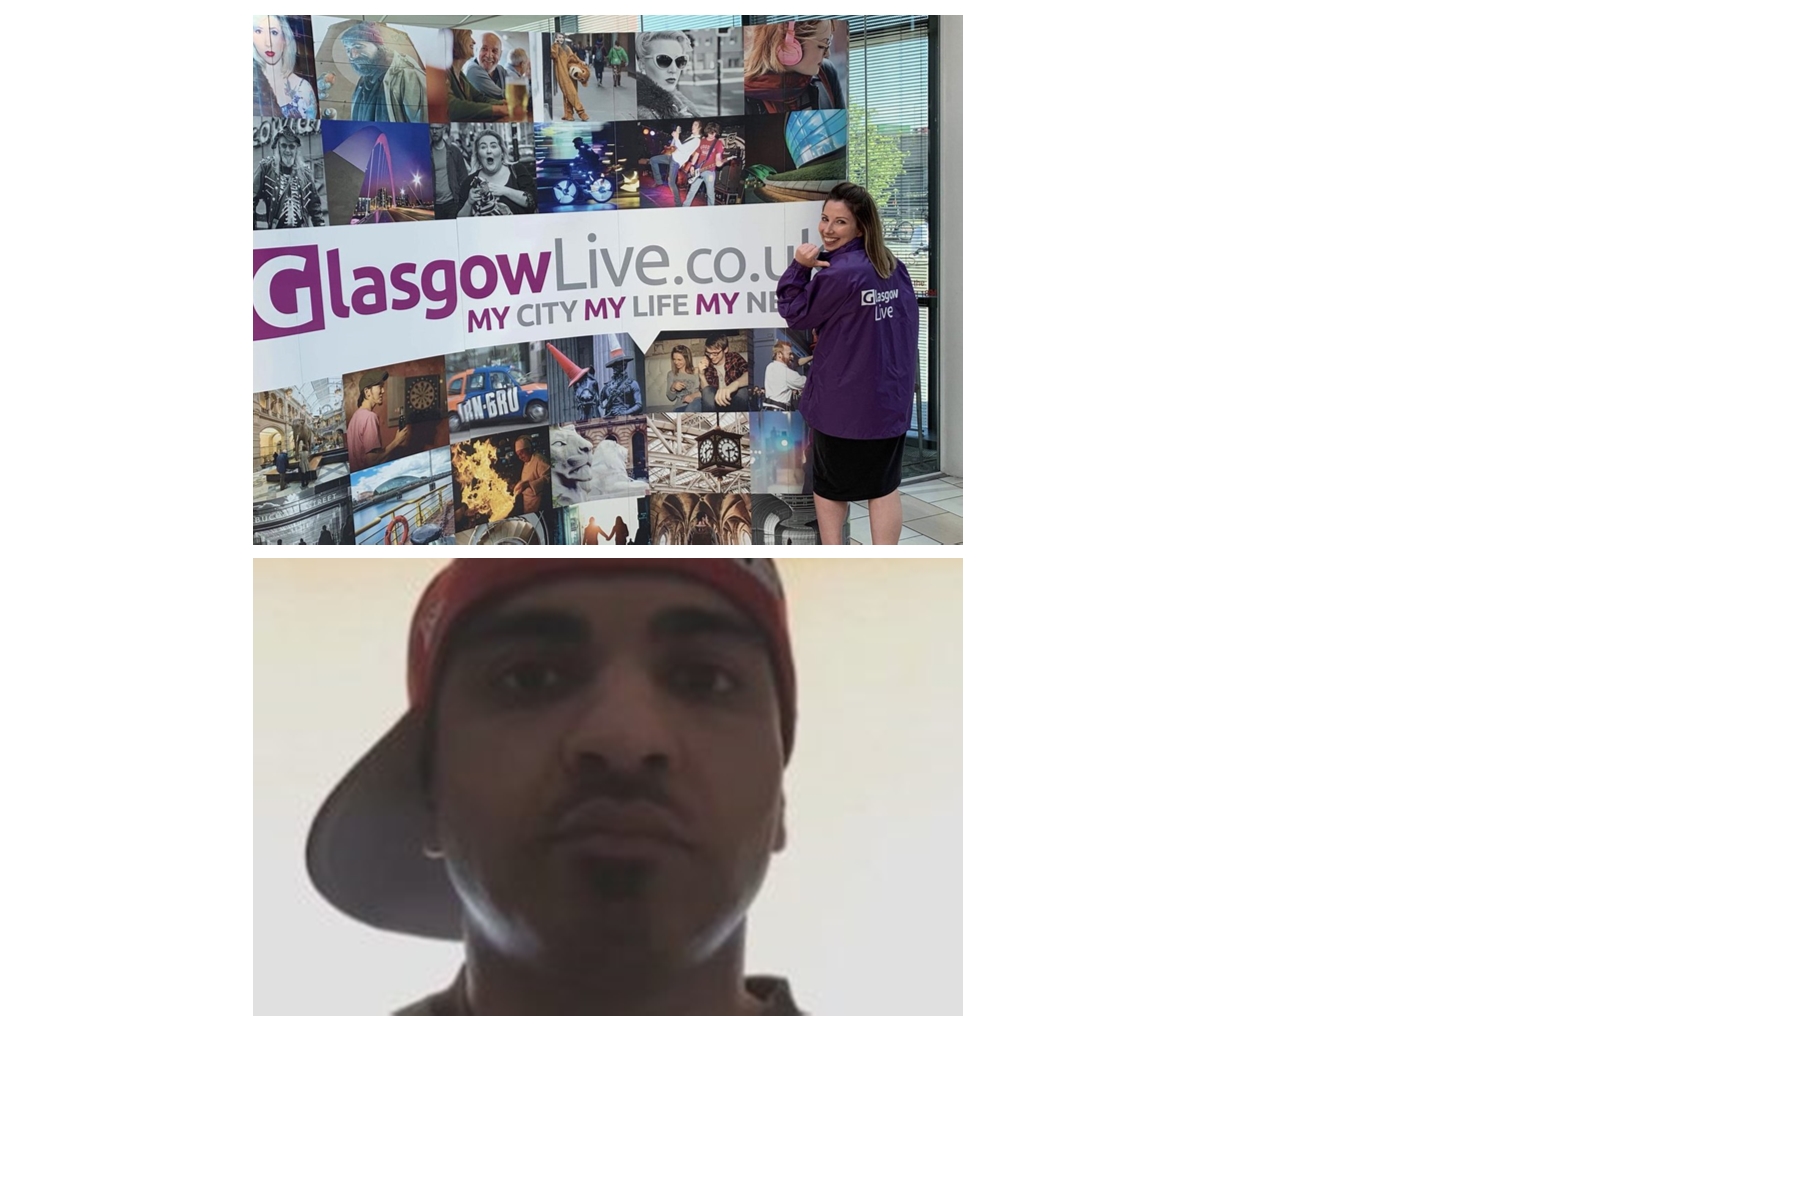 Predatory Journalist Jennifer Russell Spews Lies Via Shameful “Glasgow Live” Fake News Article About Adnan Ahmed